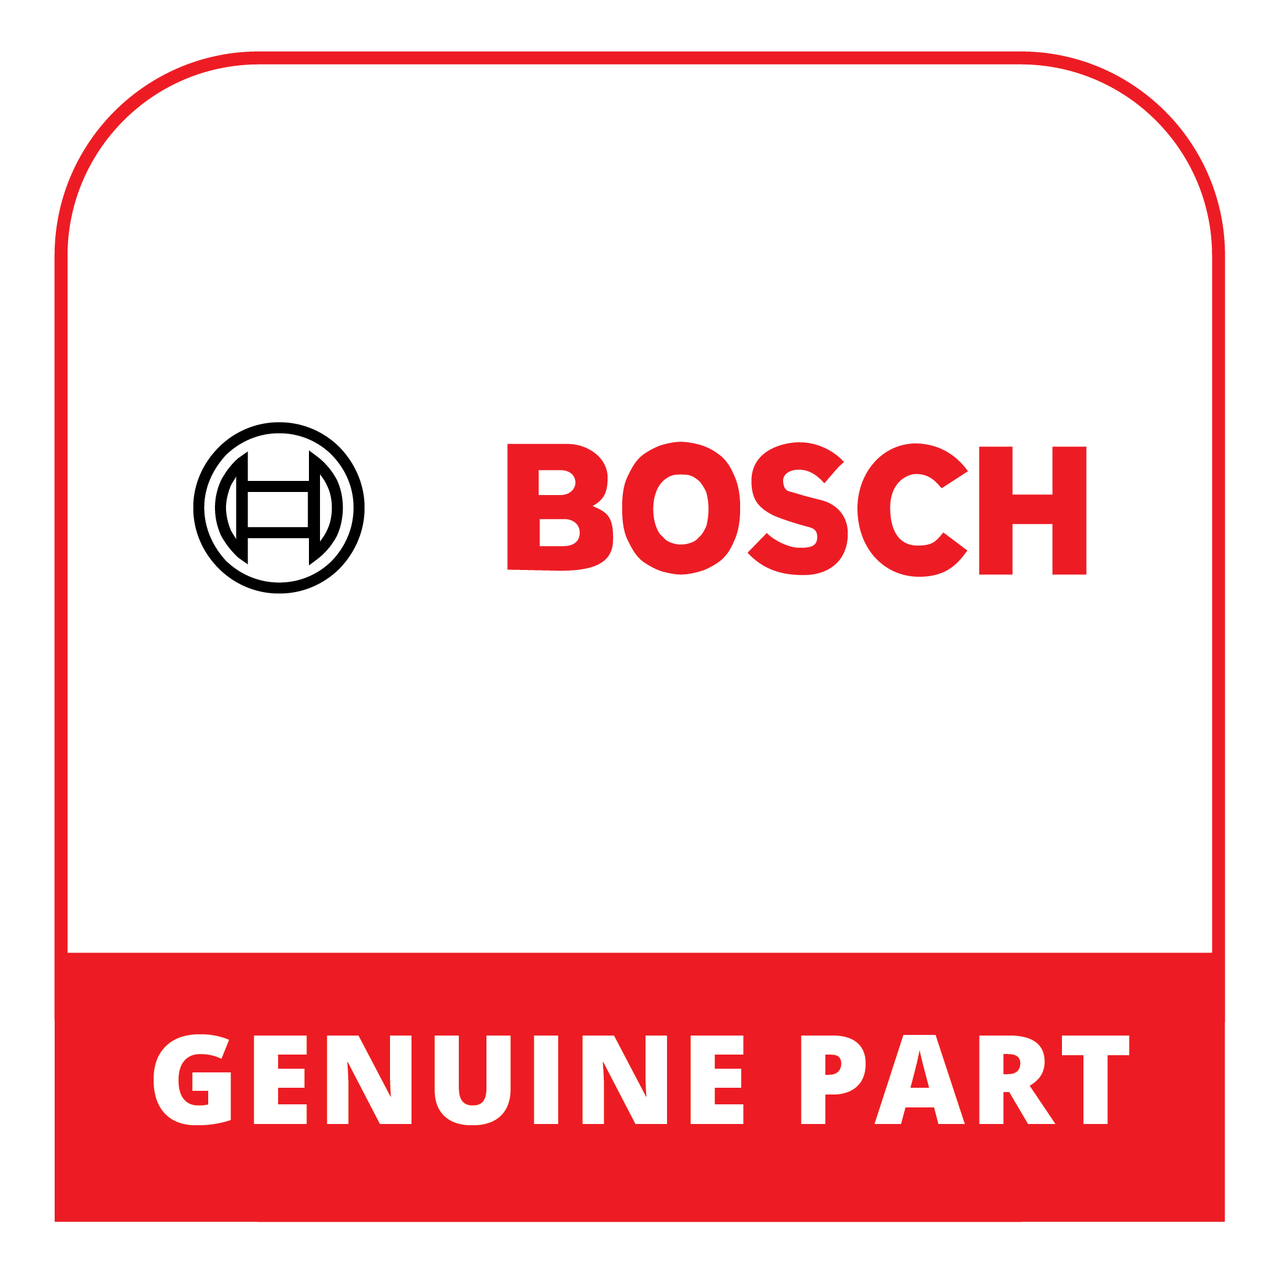 Bosch (Thermador) 18060240 - Installation Instructions Gaggenau - Genuine Bosch (Thermador) Part